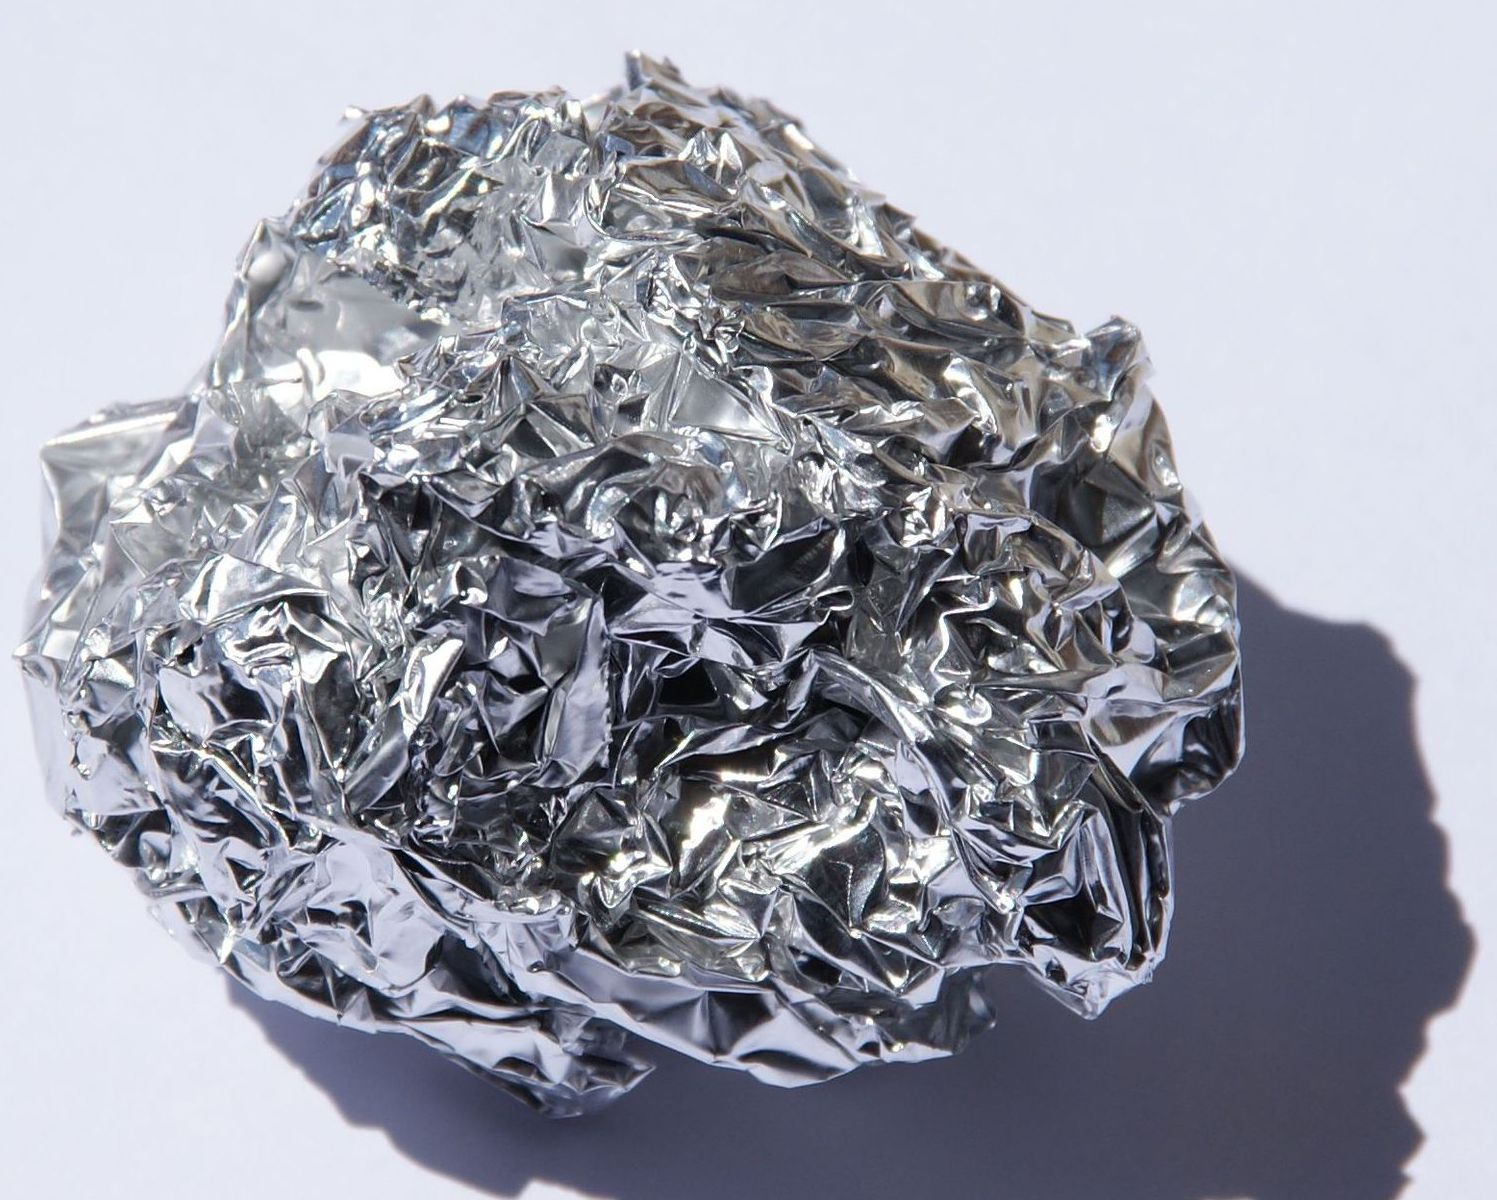 Железо это серебристо белый металл. Дюраль алюминий сплав. Алюминий хим элемент. Сплавы алюминий-медь-кремний. Алюминий a5n.